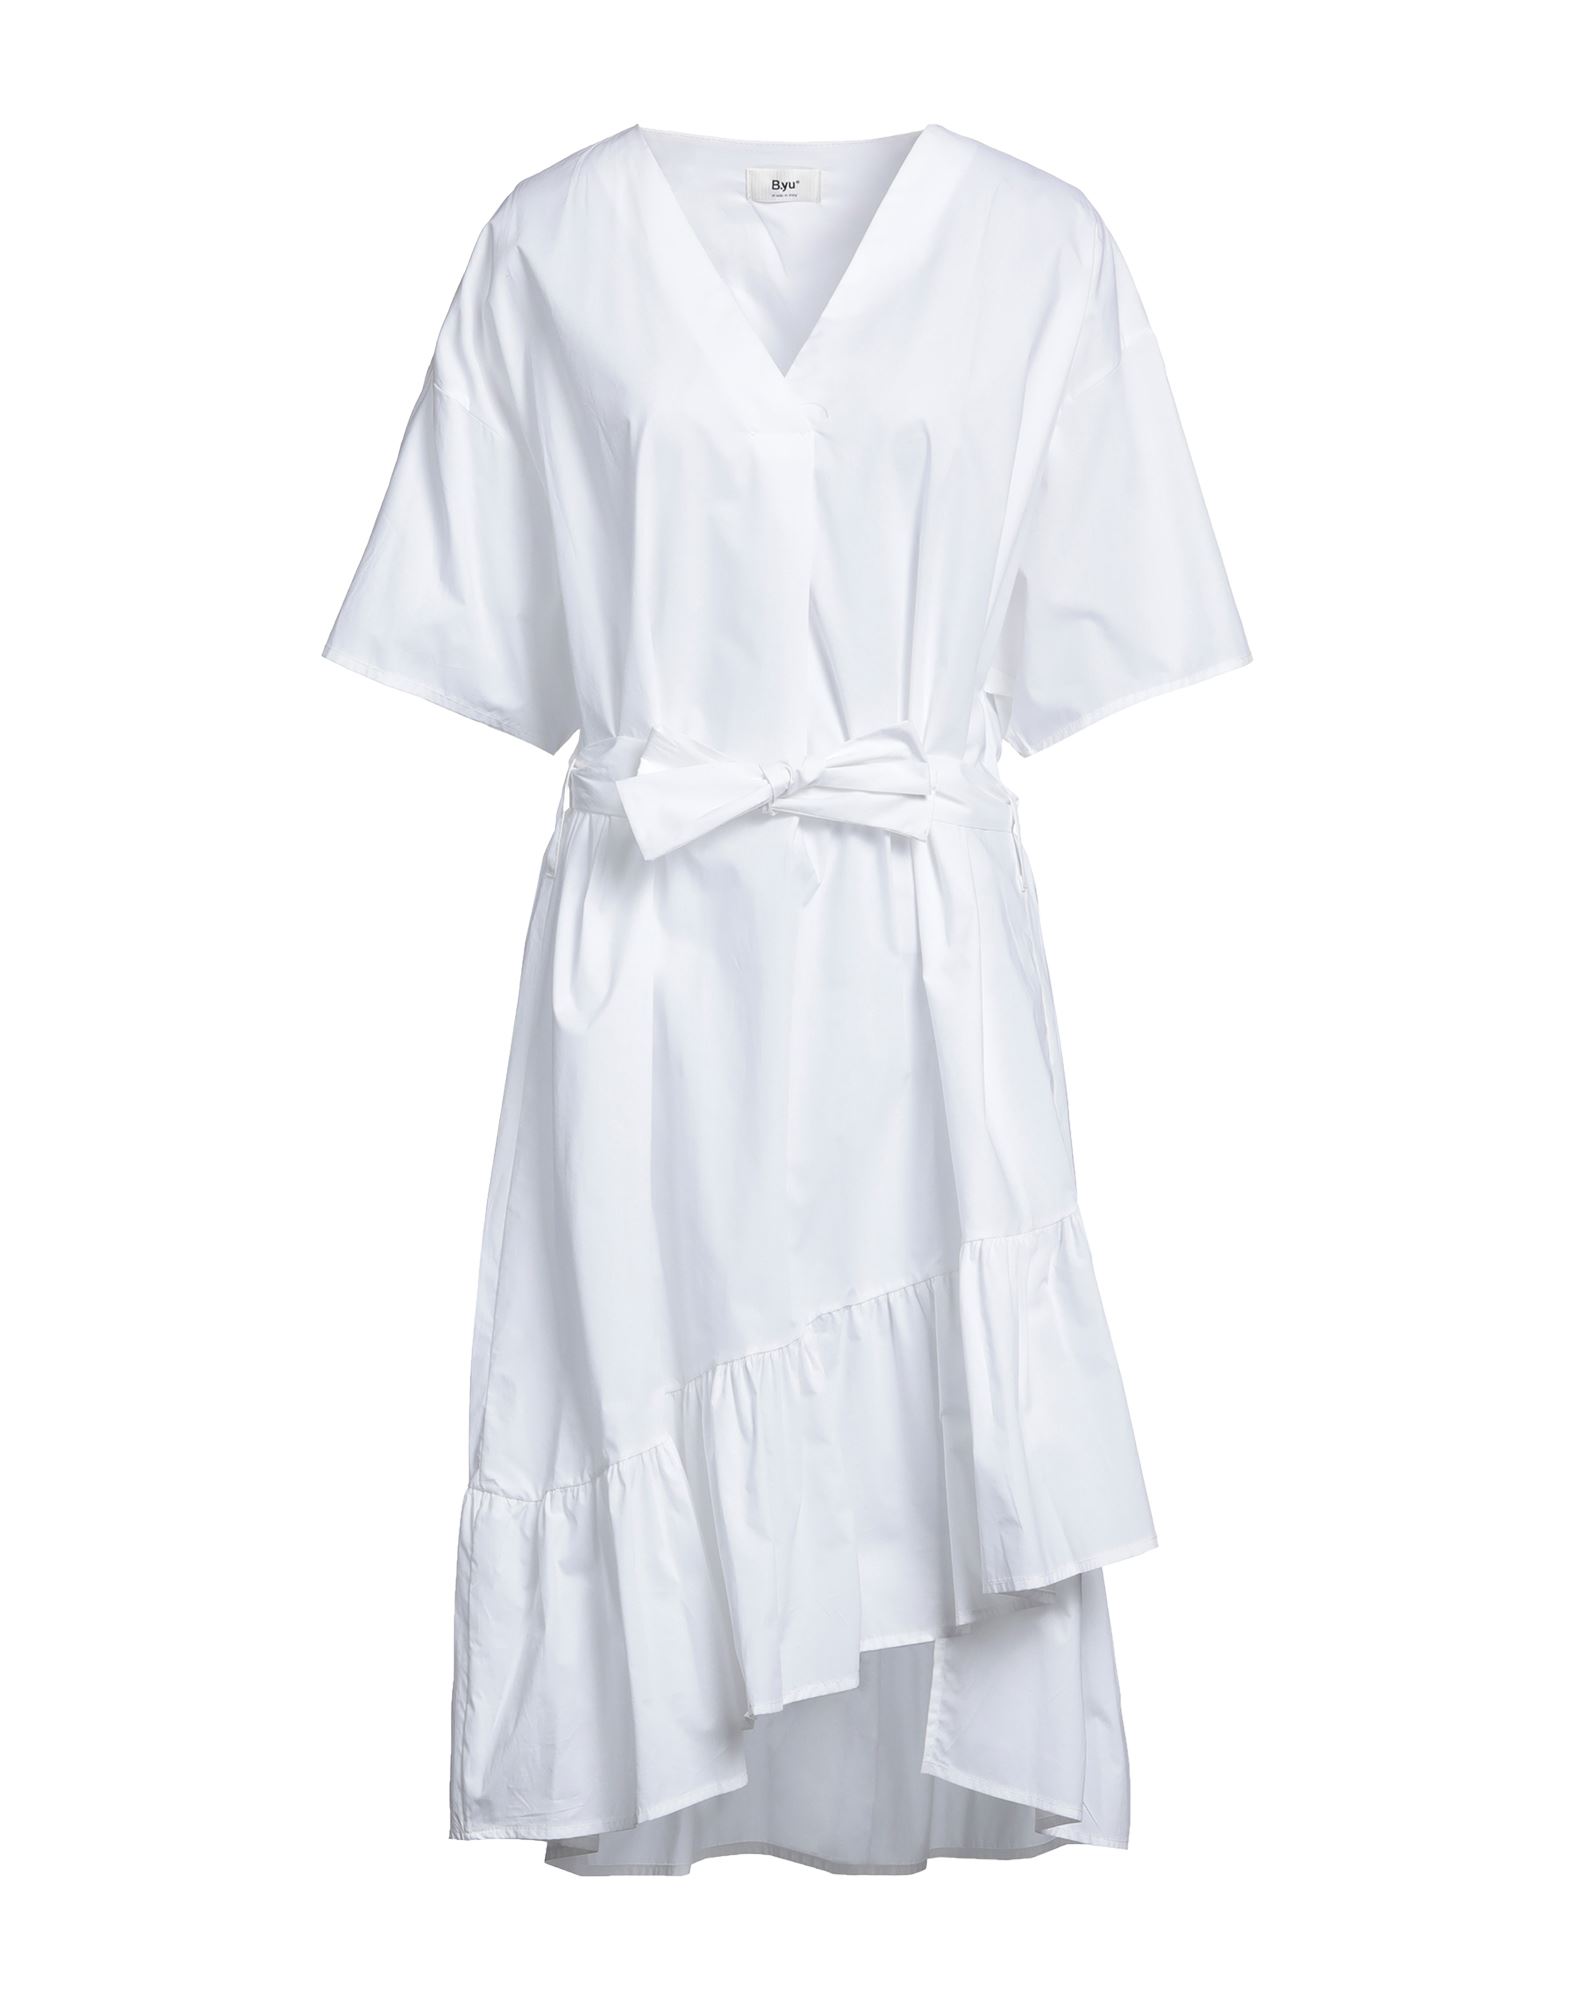 B.yu Short Dresses In White